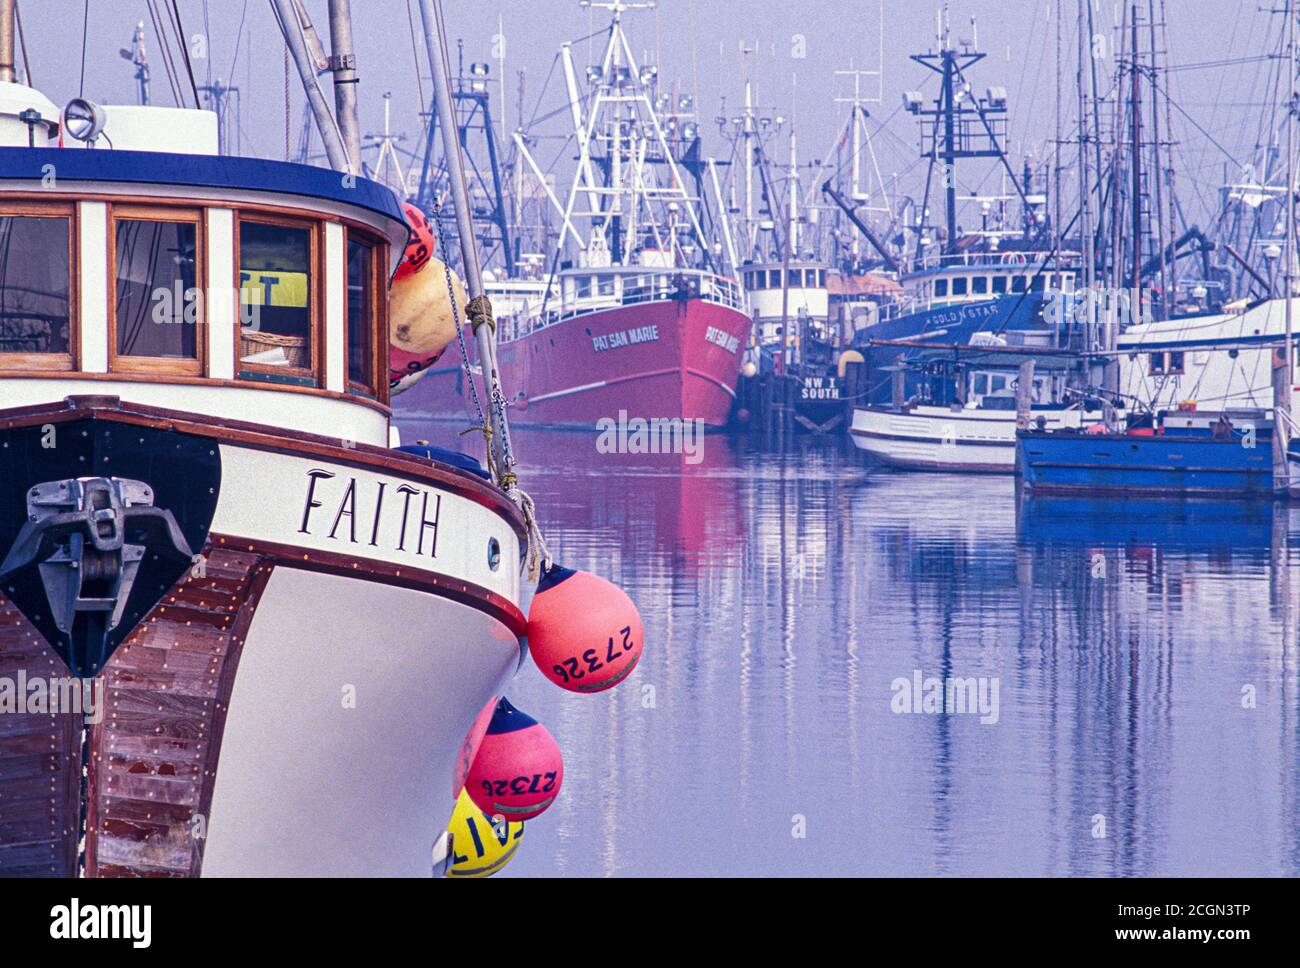 Fishing boat named Faith in fog at Fisherman’s Terminal, Port of Seattle, Washington USA Stock Photo